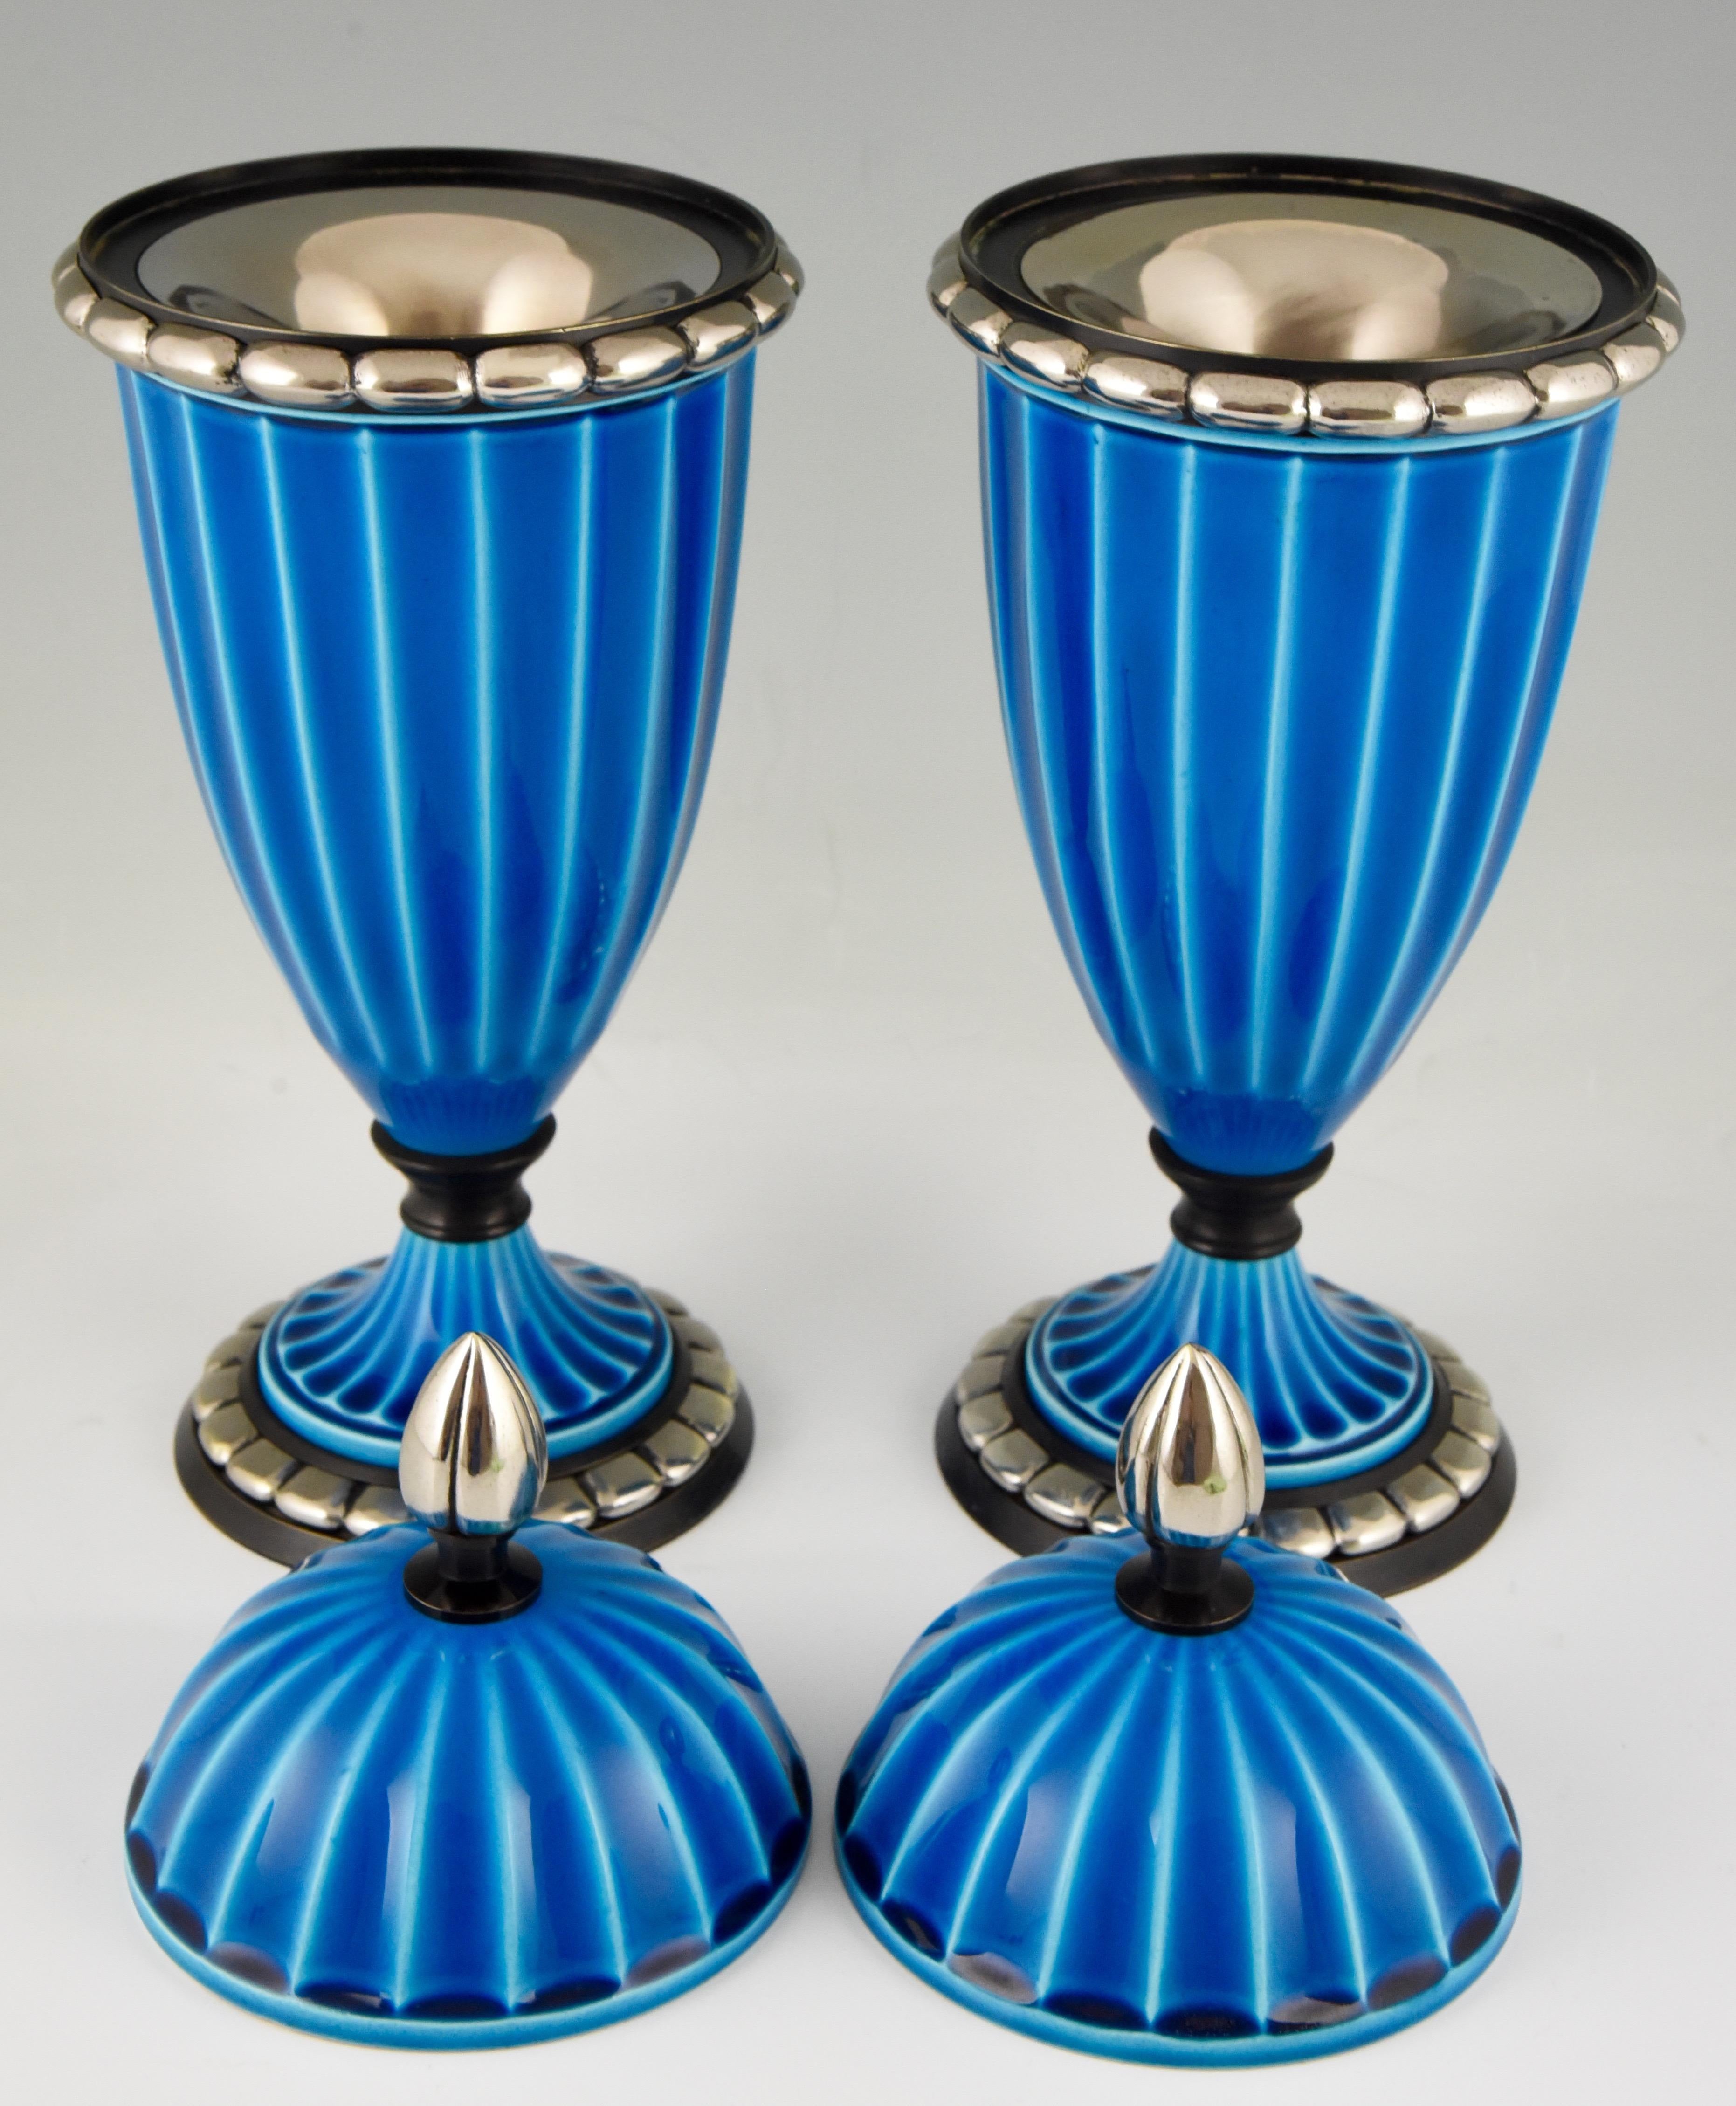 Bronze Pair of Art Deco Ceramic Vases or Urns with Blue Glaze Paul Milet for Sèvres